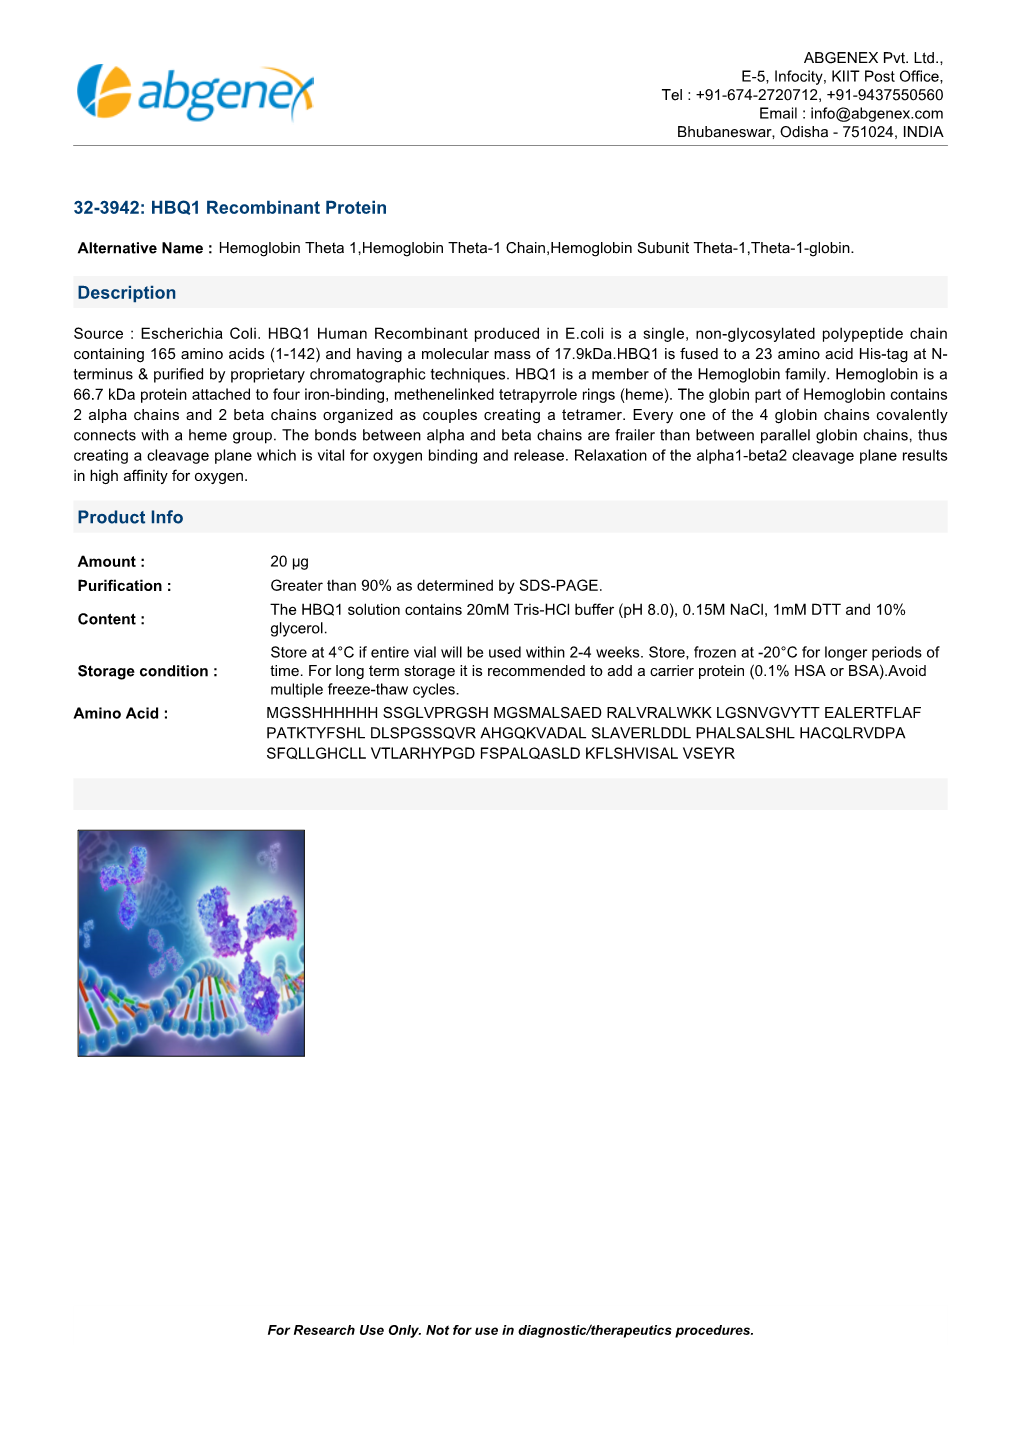 32-3942: HBQ1 Recombinant Protein Description Product Info